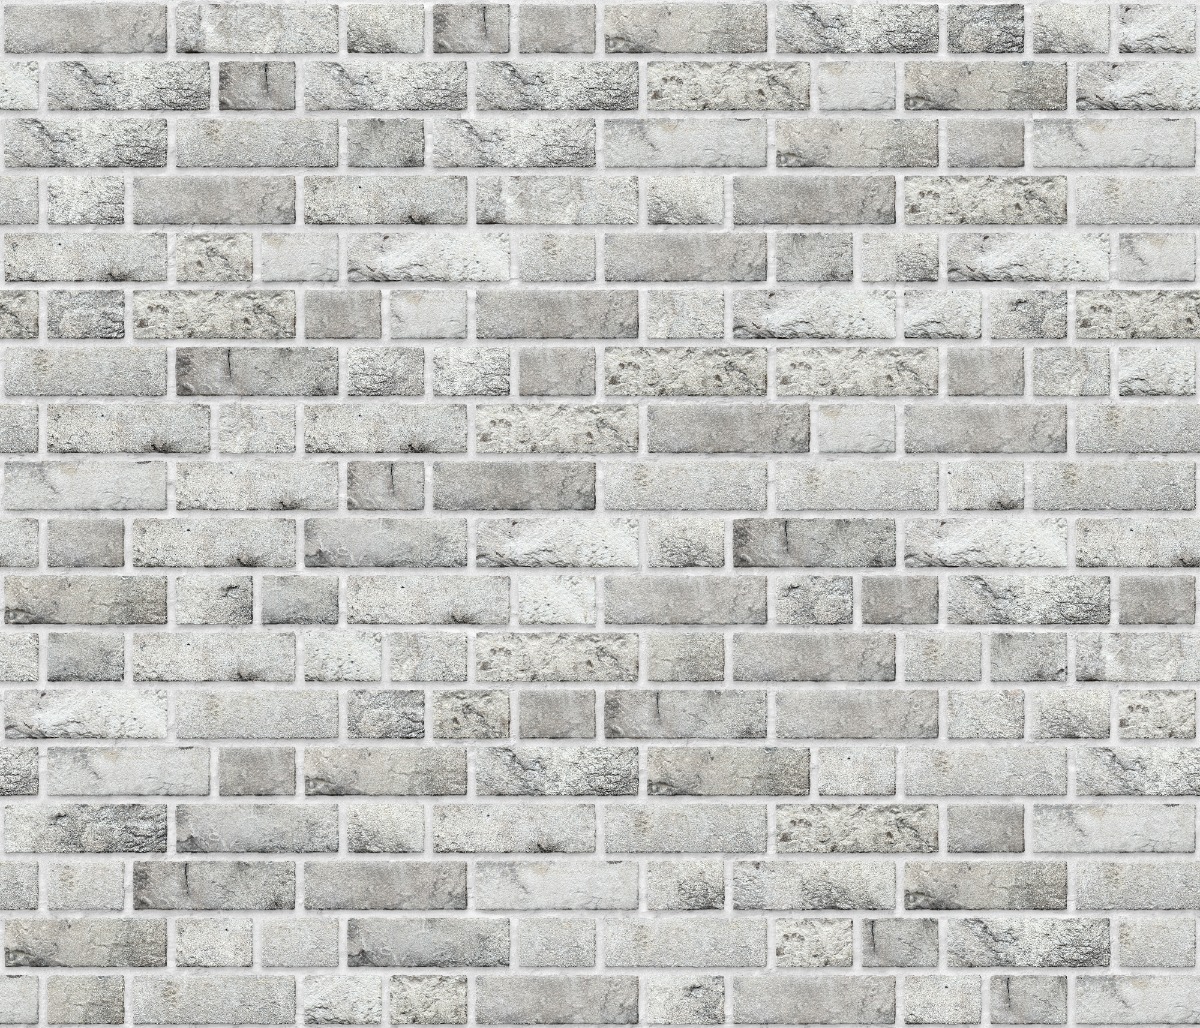 A seamless brick texture with nachte brick units arranged in a Random Bond pattern